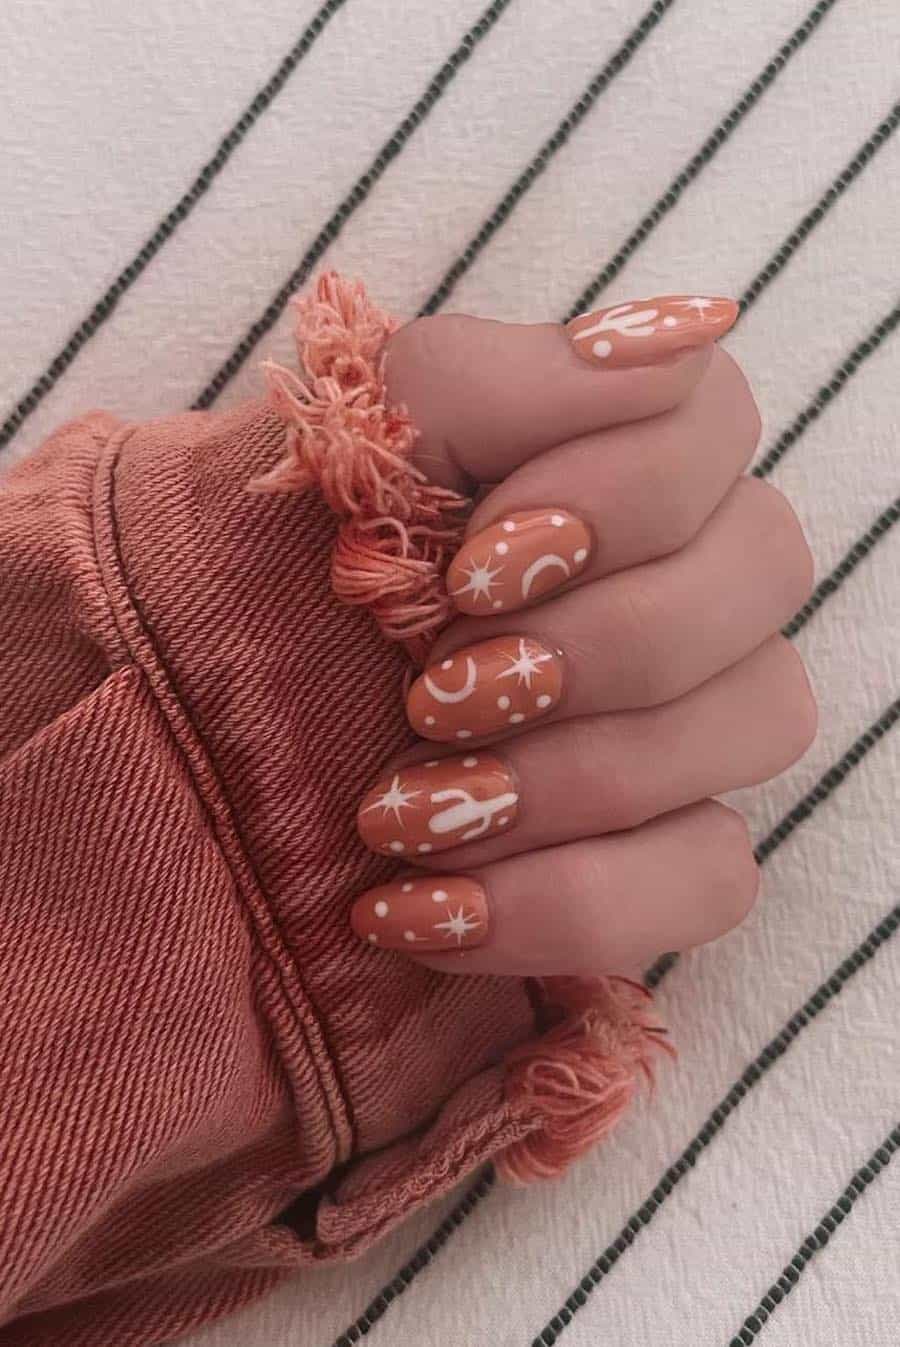 Medium round nails with dusty orange polish and white Western-inspired nail art